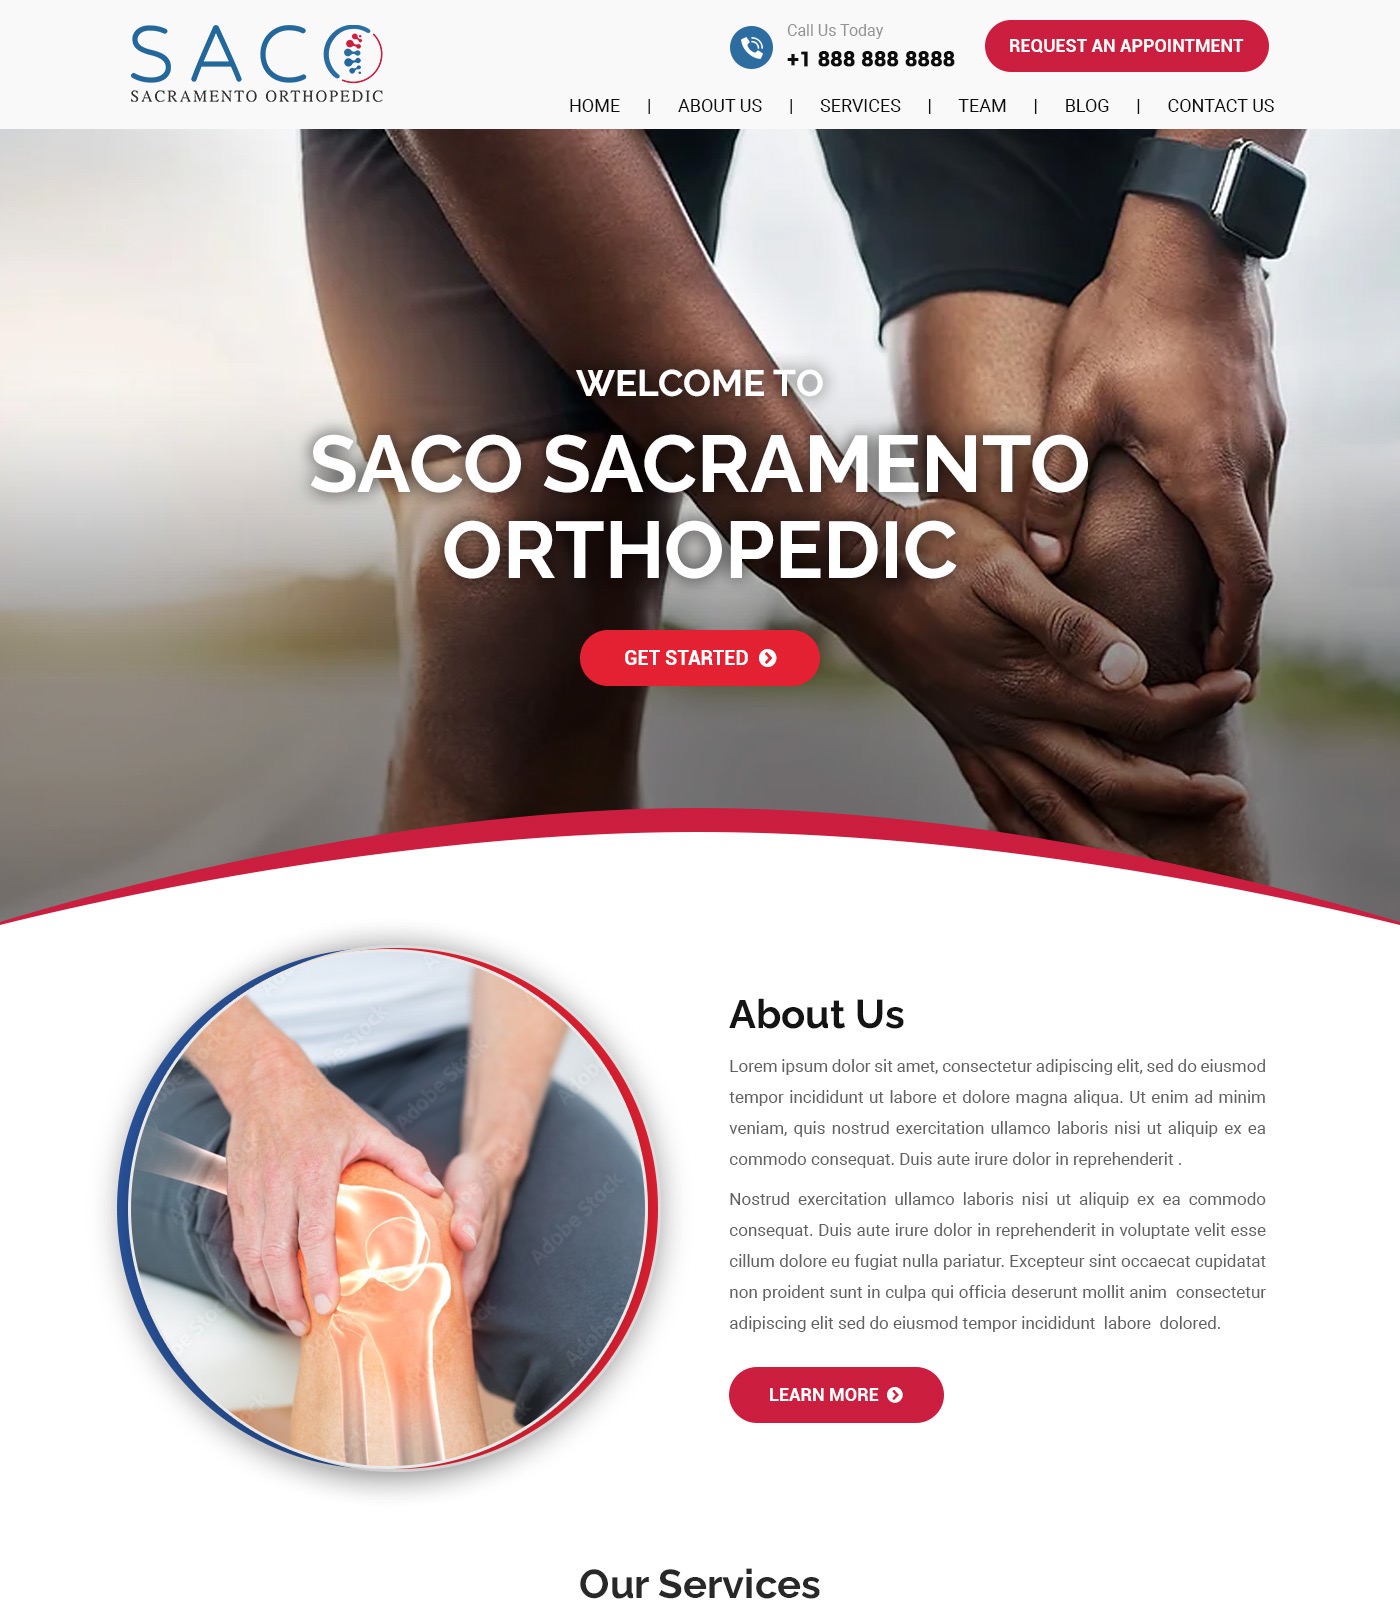 Healthcare website design example